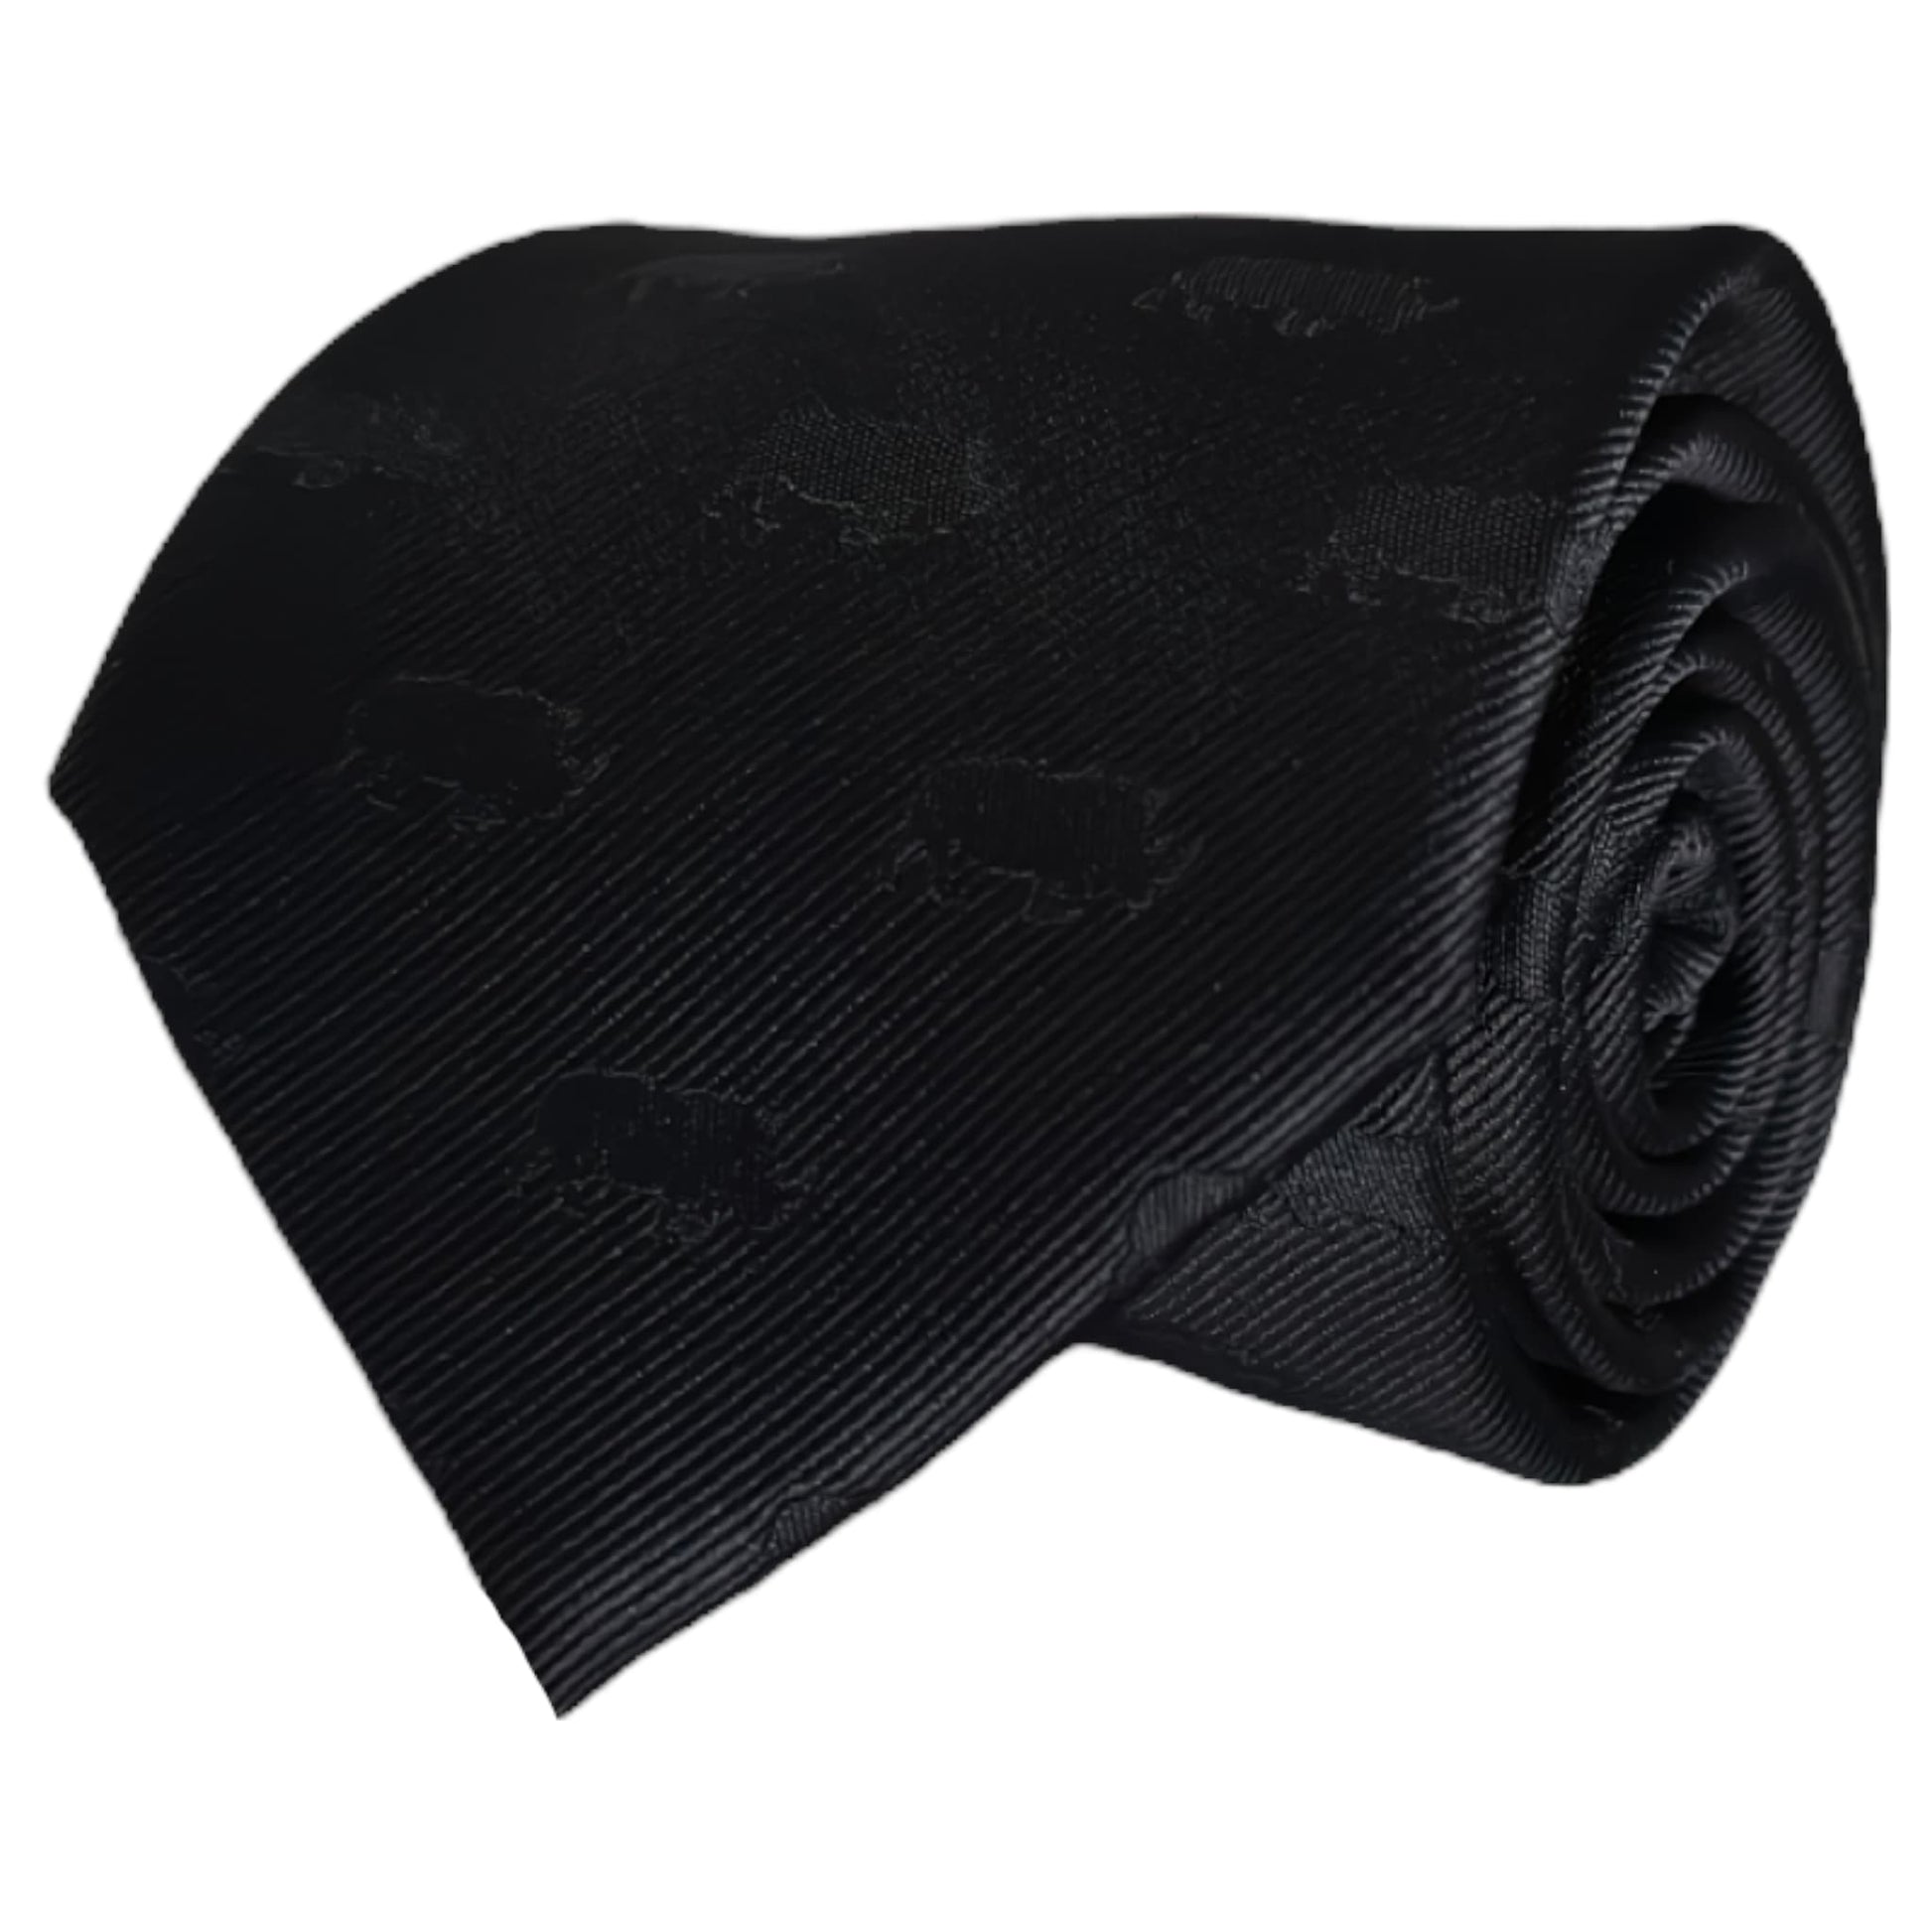 Louis Vuitton Black Ties for Men